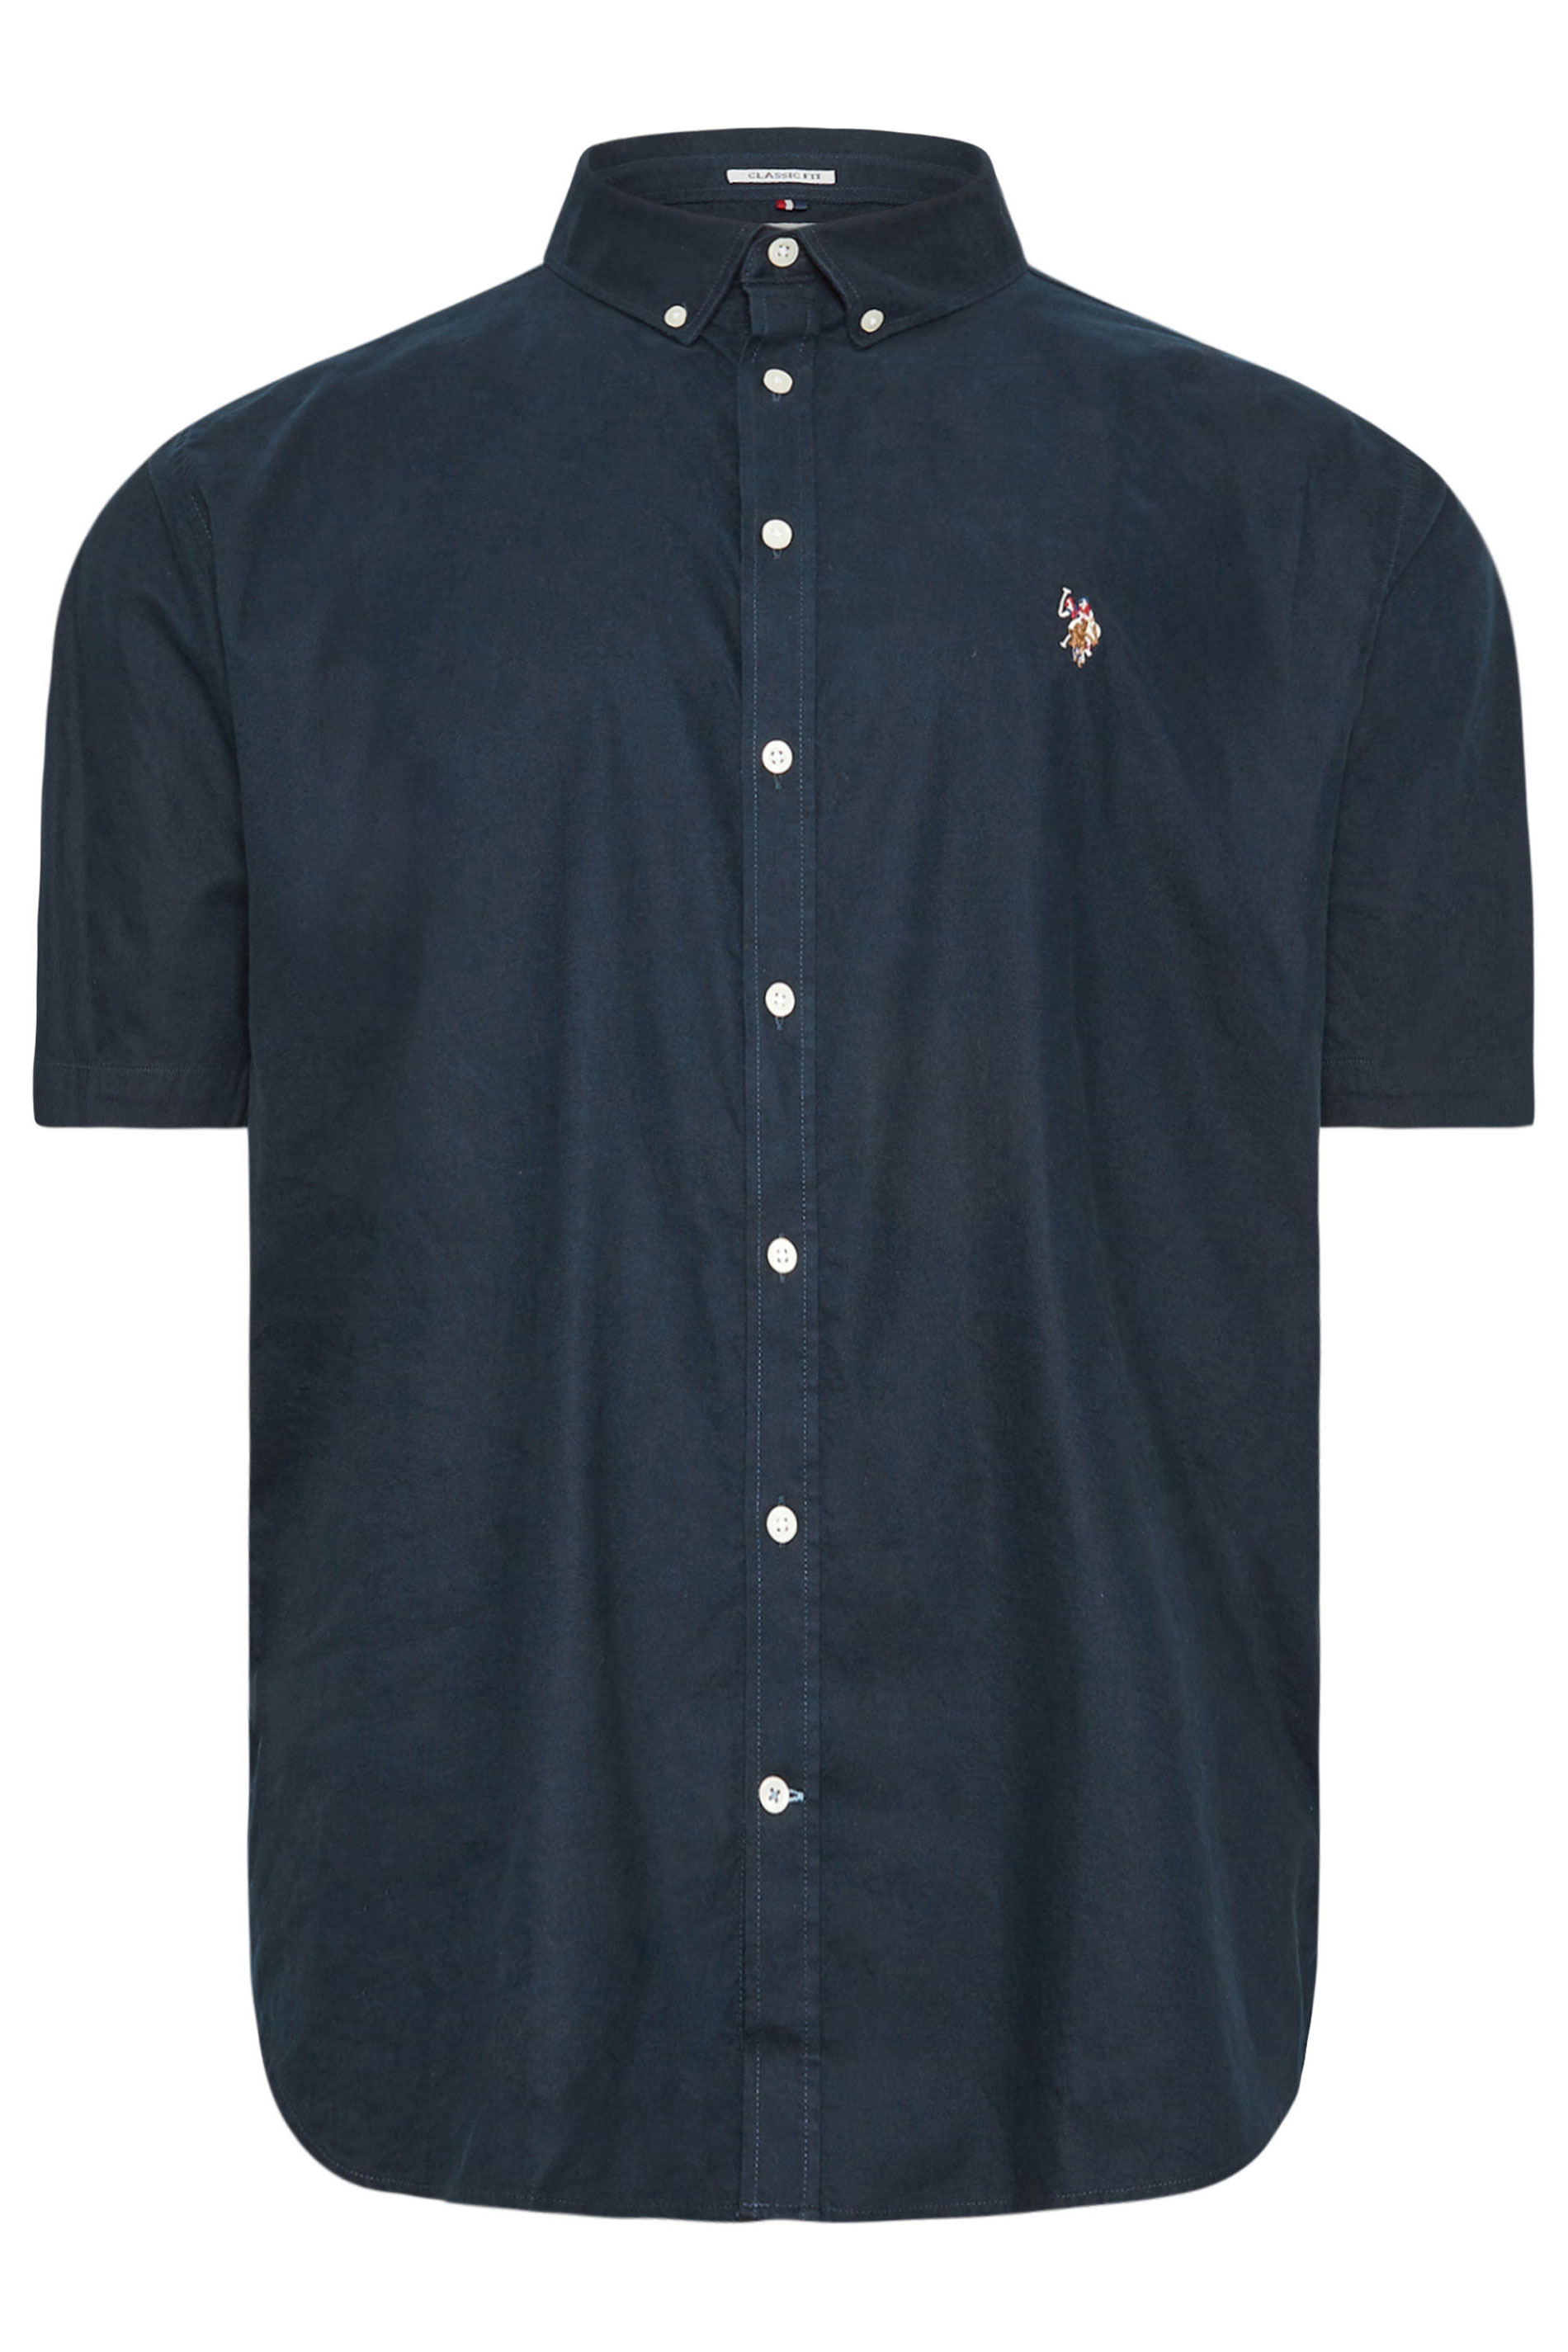 U.S. POLO ASSN. Navy Blue Short Sleeve Oxford Shirt | BadRhino 2